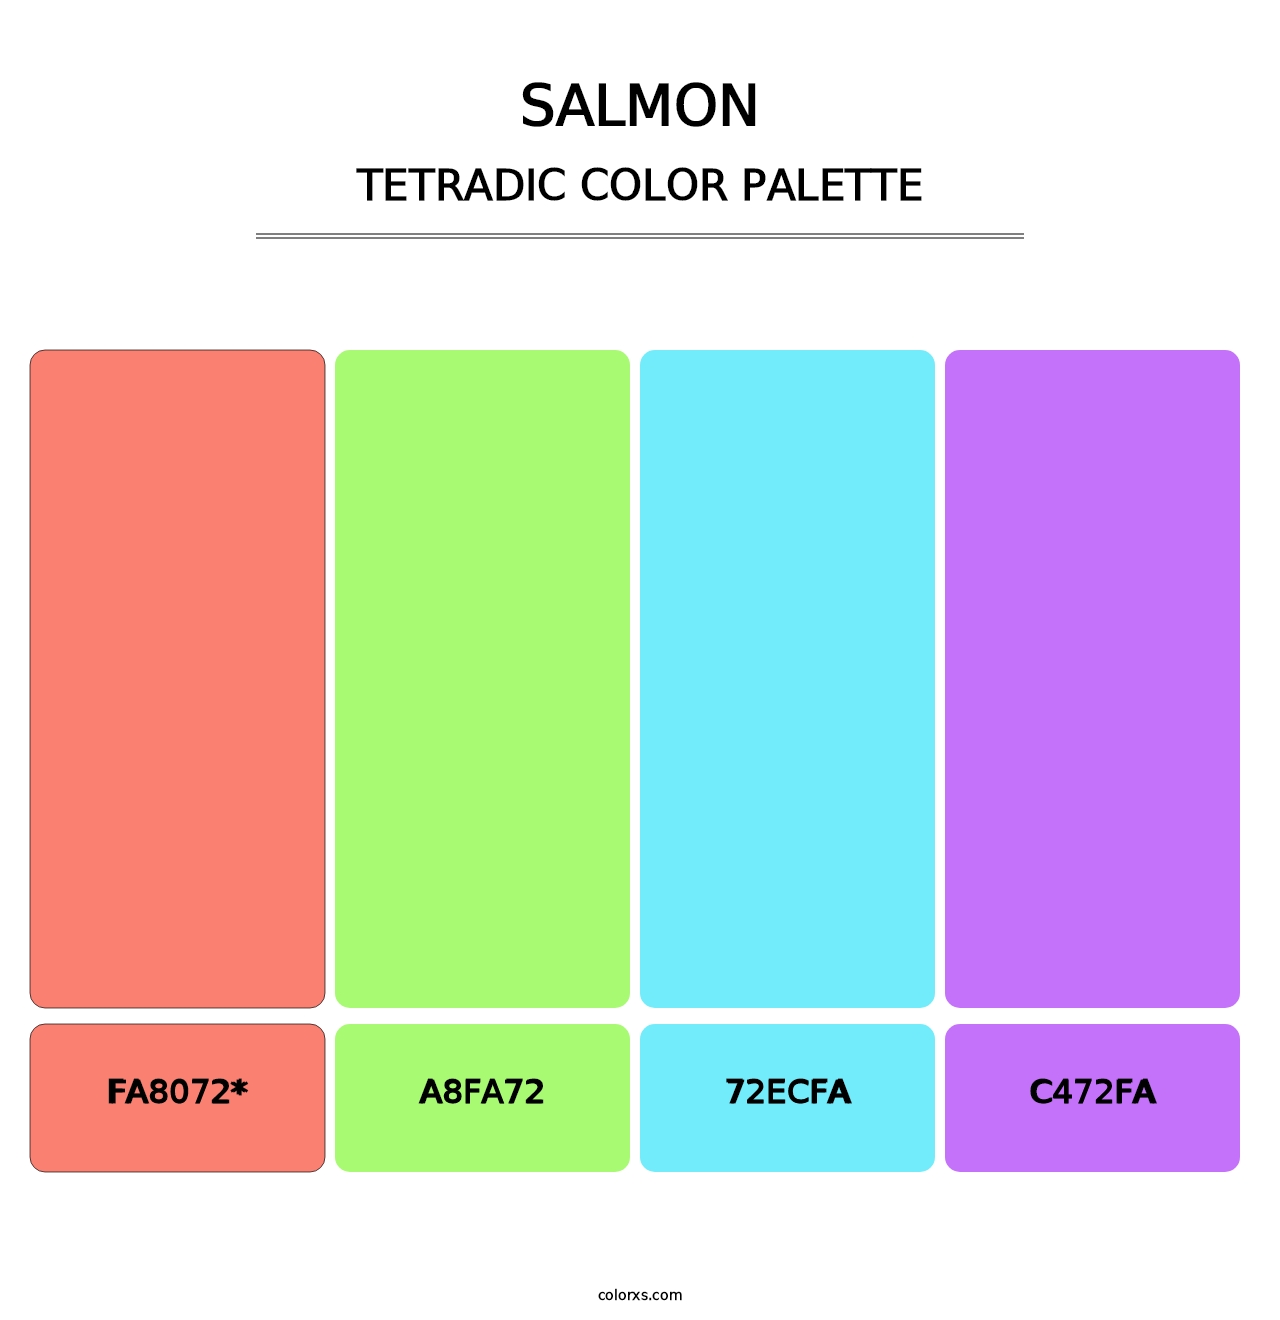 Salmon - Tetradic Color Palette